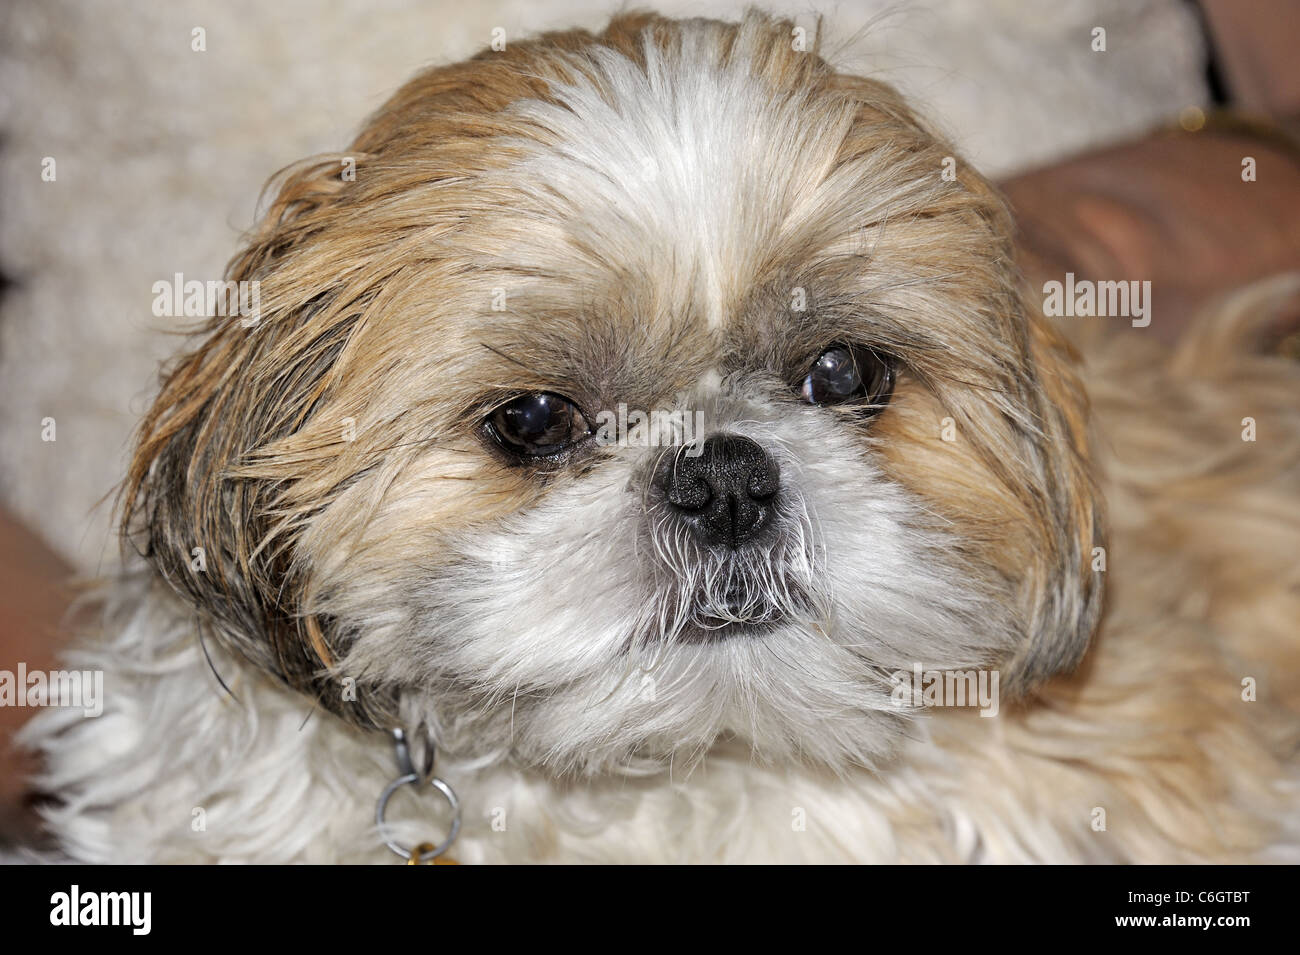 Close up of head of Shitzsu dog. Stock Photo